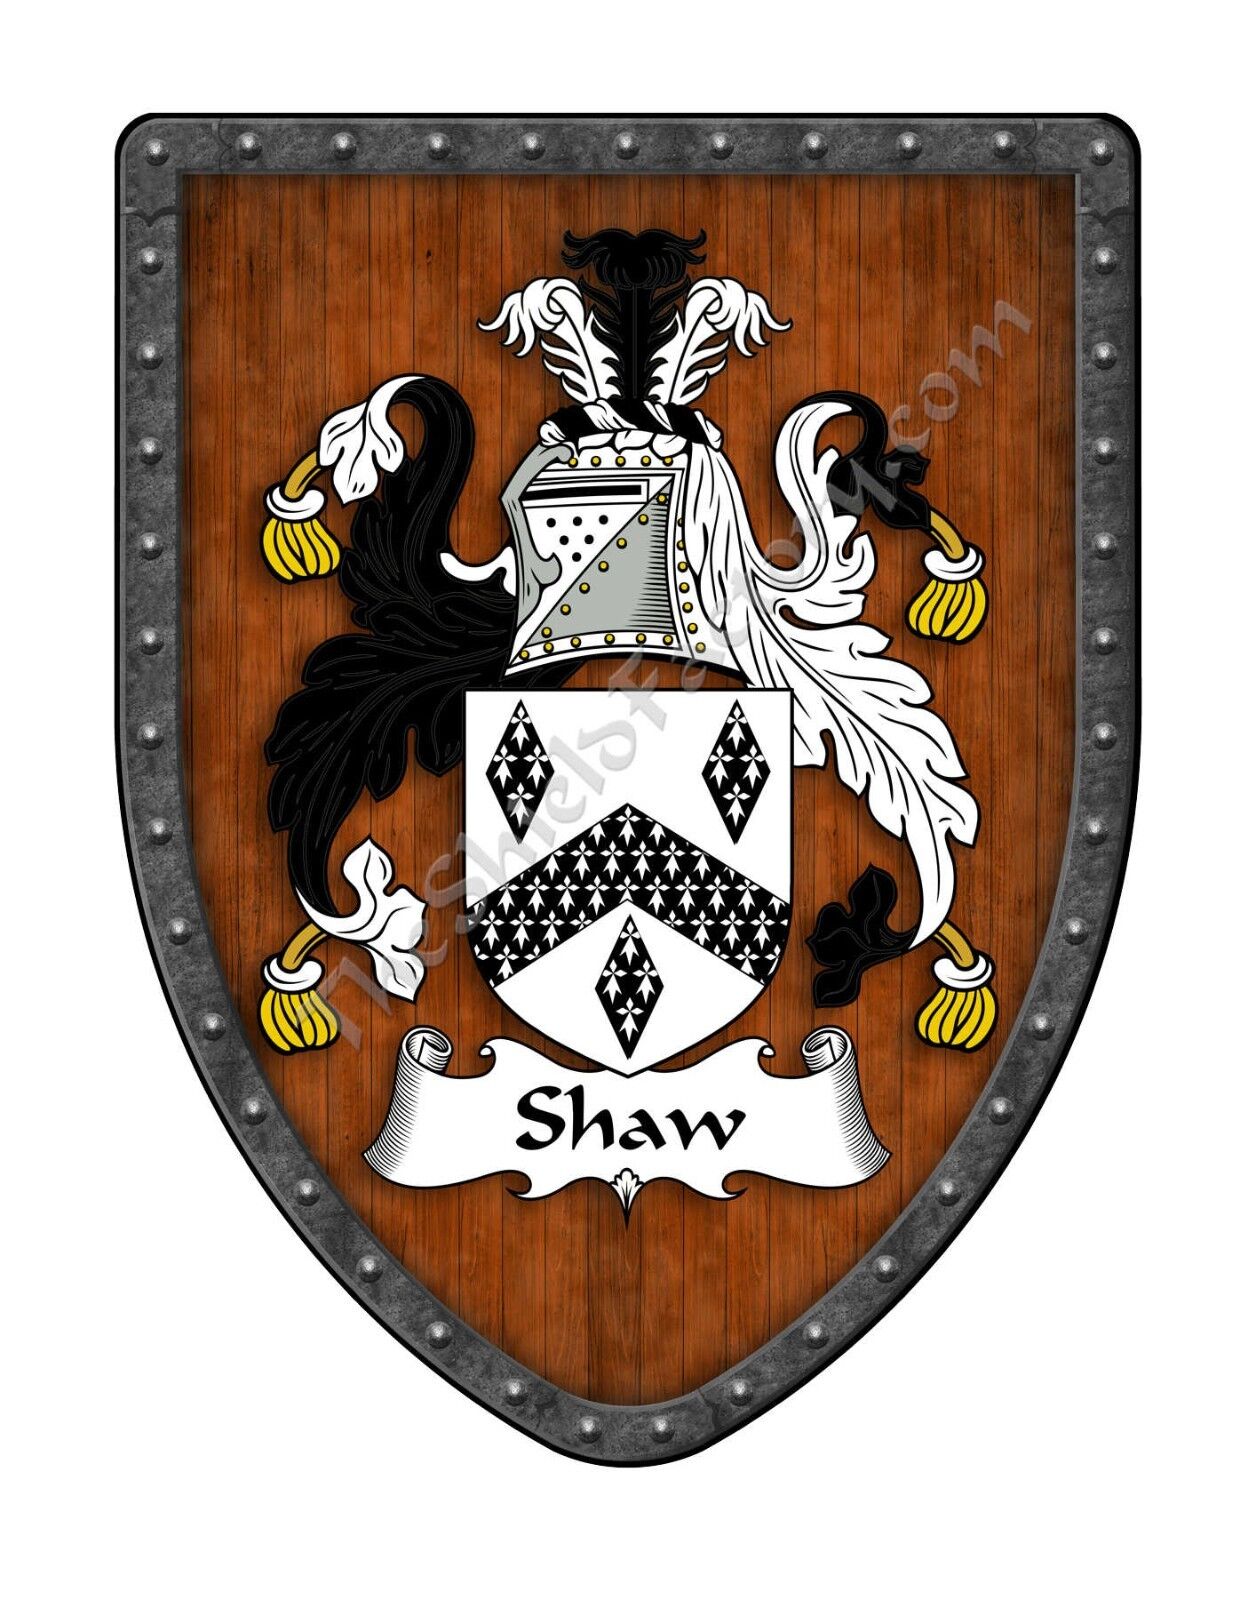 Shaw Family Custom Crest Coat Of Arms Hanging Shield Sh503p-dg-hg